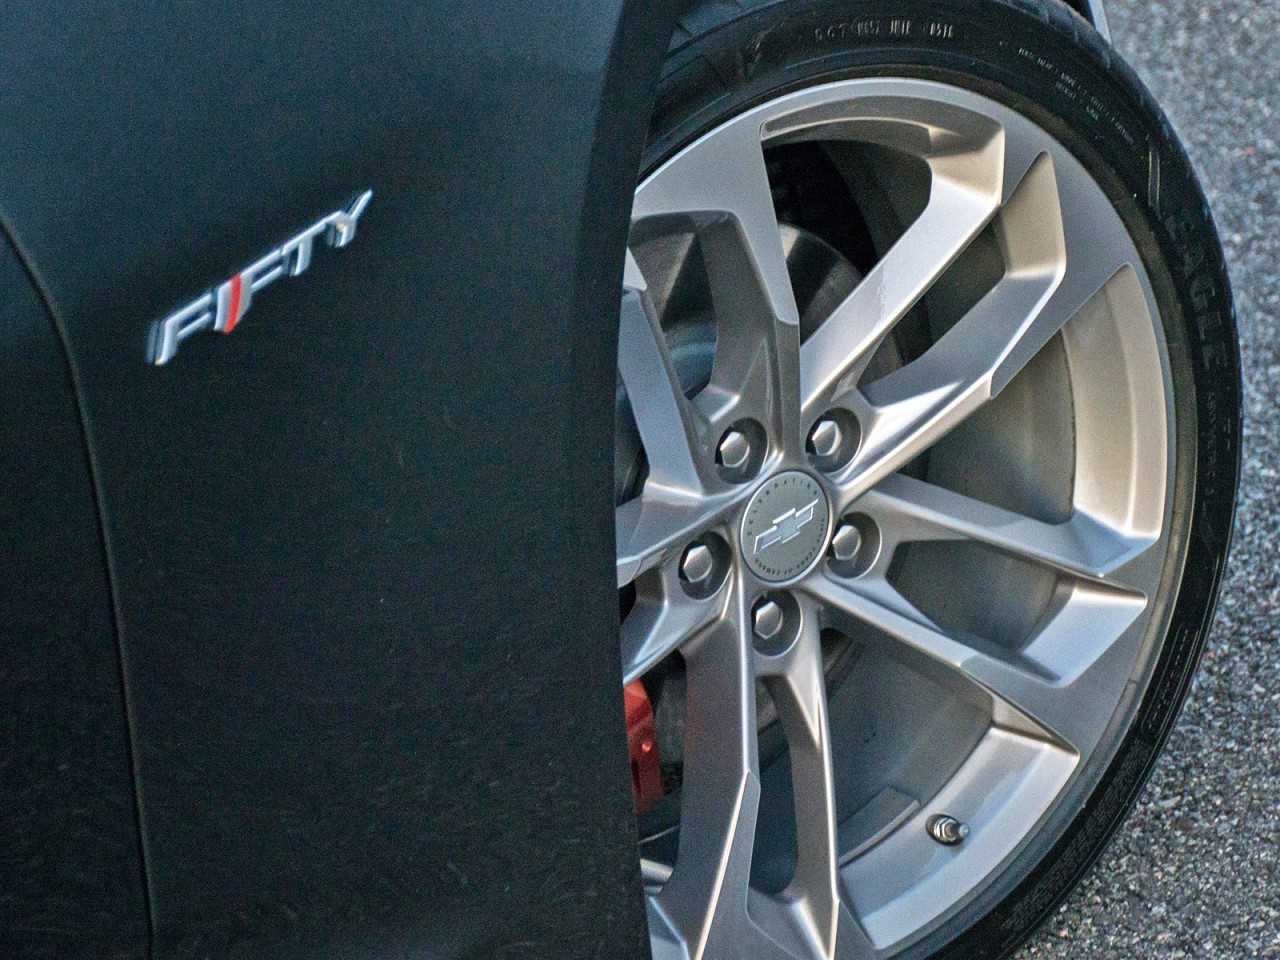 ChevroletCamaro 2017 - rodas